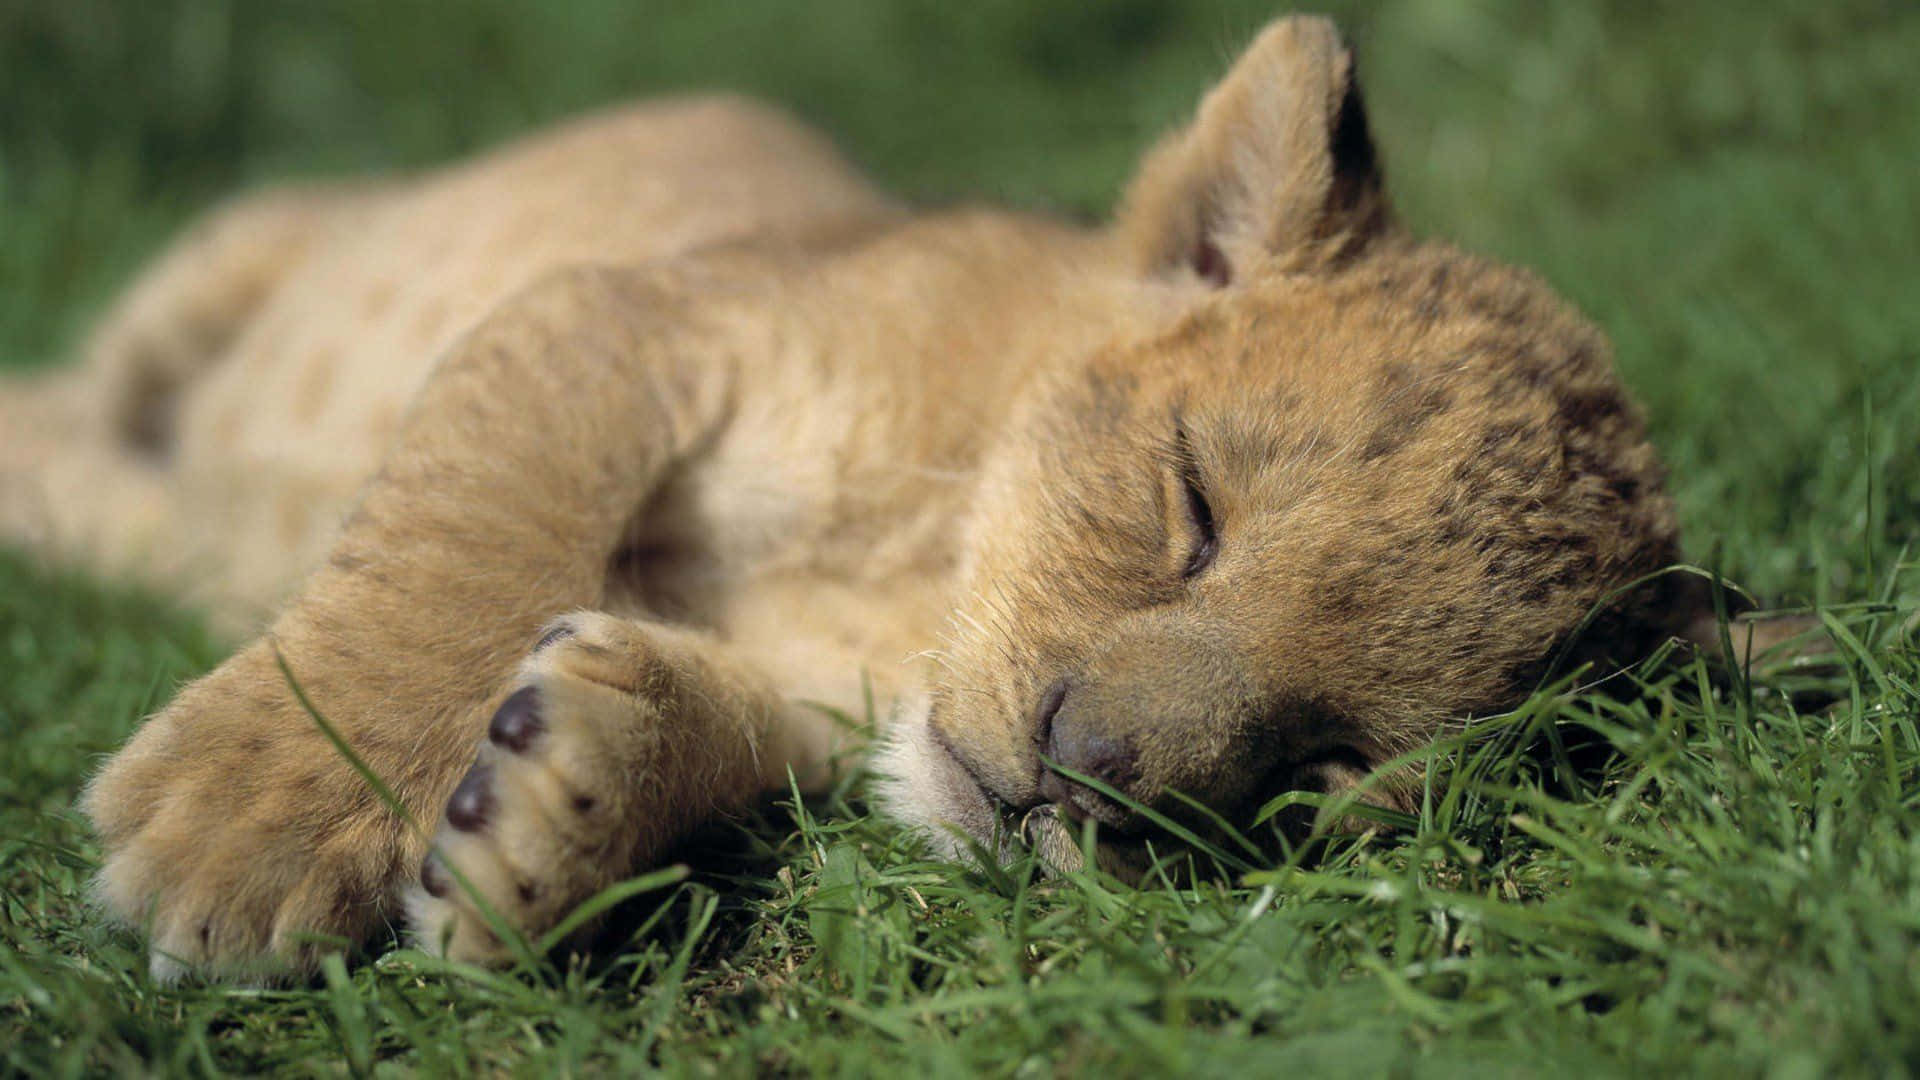 A Lion Cub Sleeping On The Grass